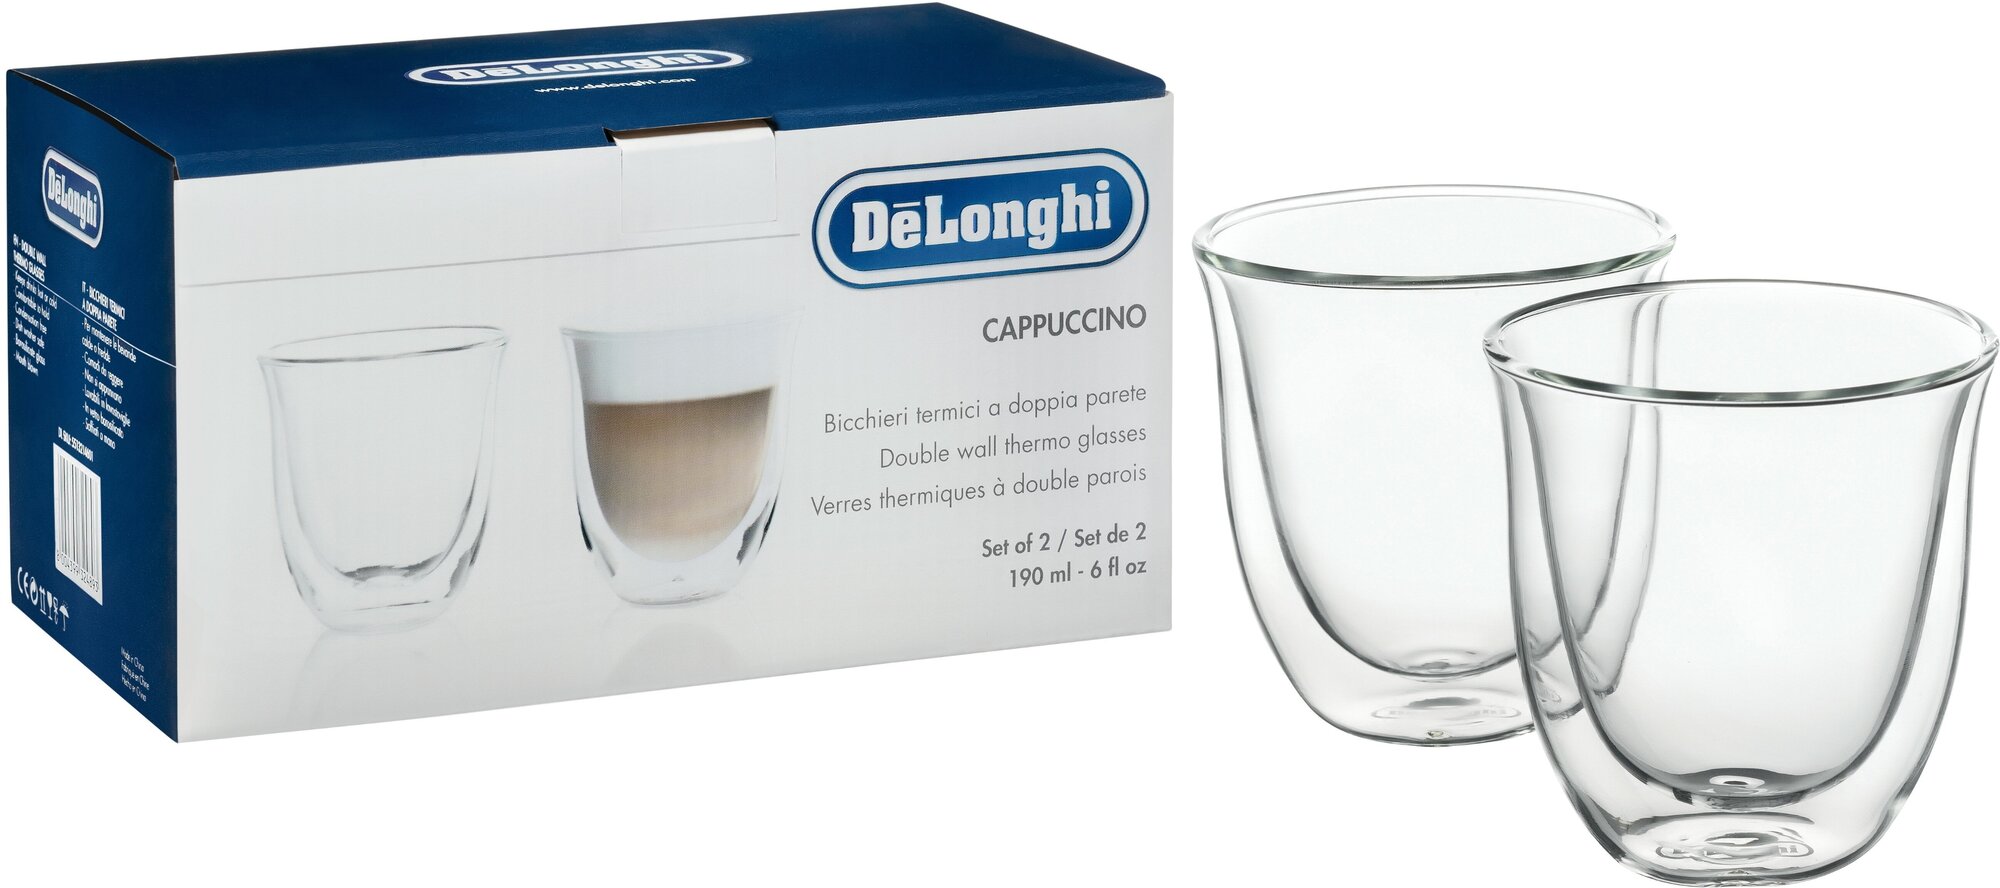 DeLonghi чашки для капучино CAPPUCCINO (2 шт.)